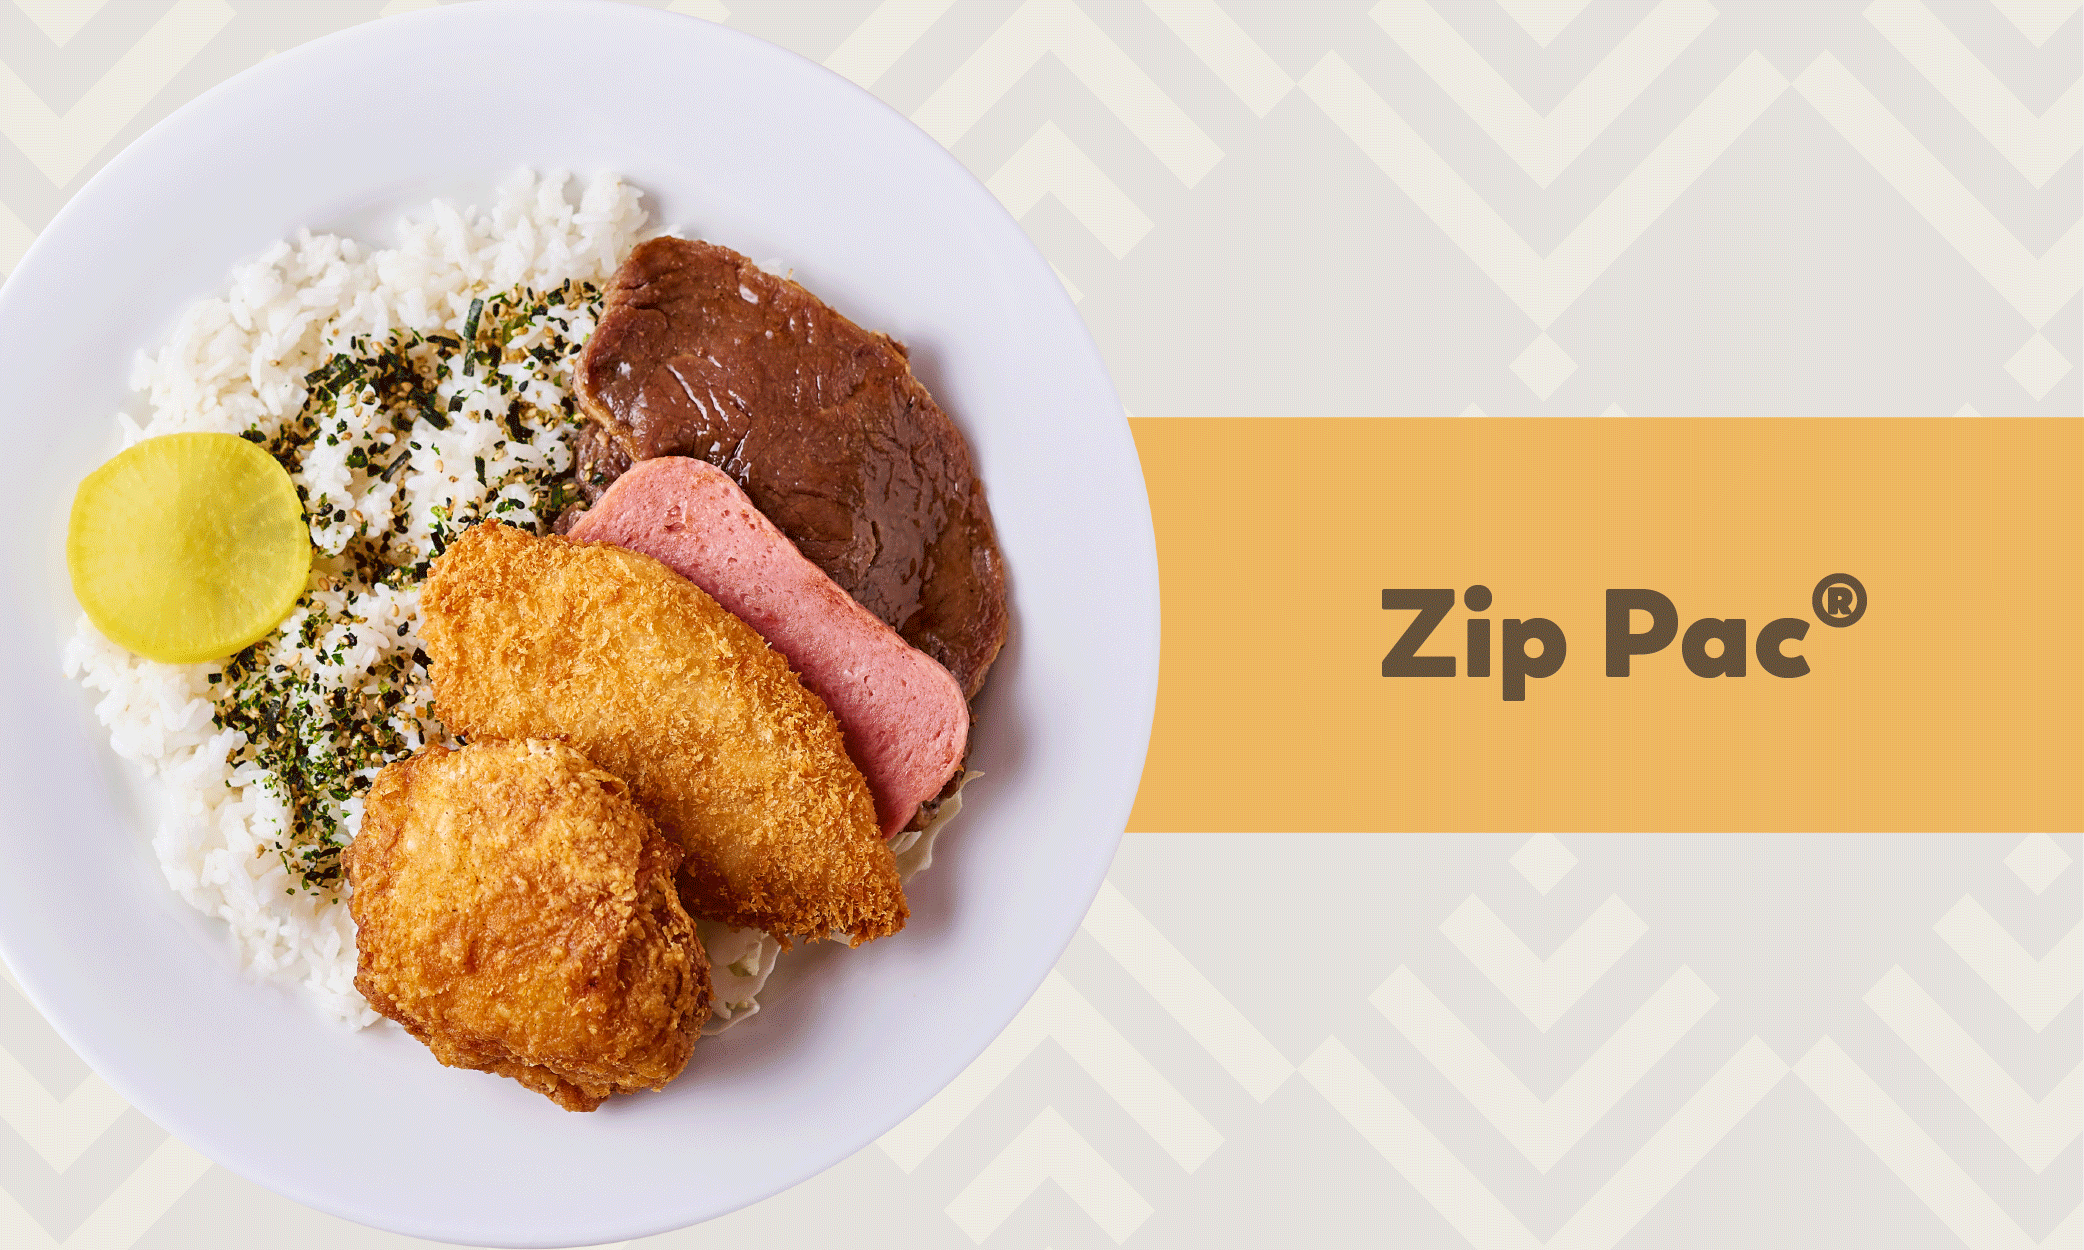 Zip Pac®, Korean Fried Chicken, and Chili Chicken Mixed Plate